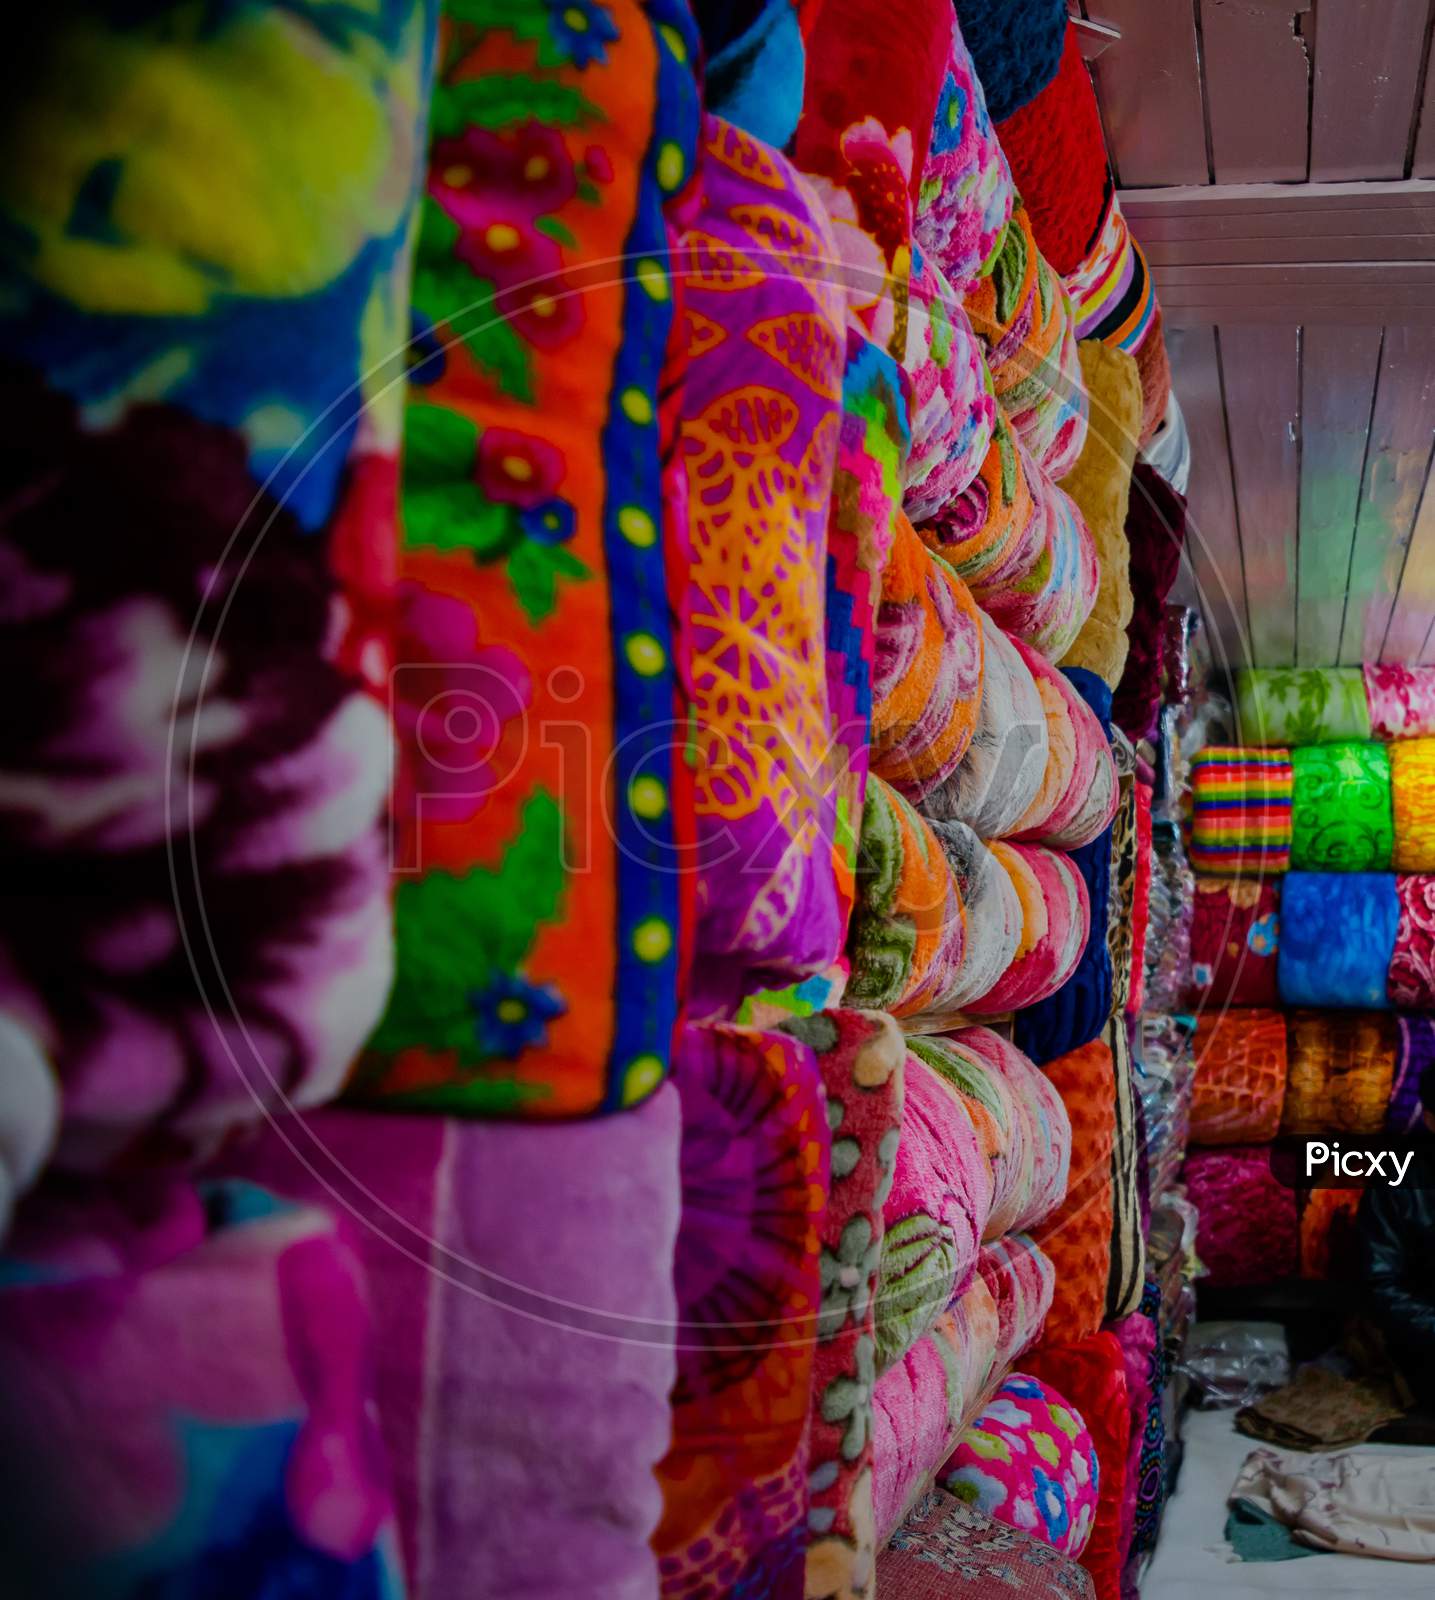 handmade colorful soft blankets made from bird bulbul fur, Patnitop Jammu